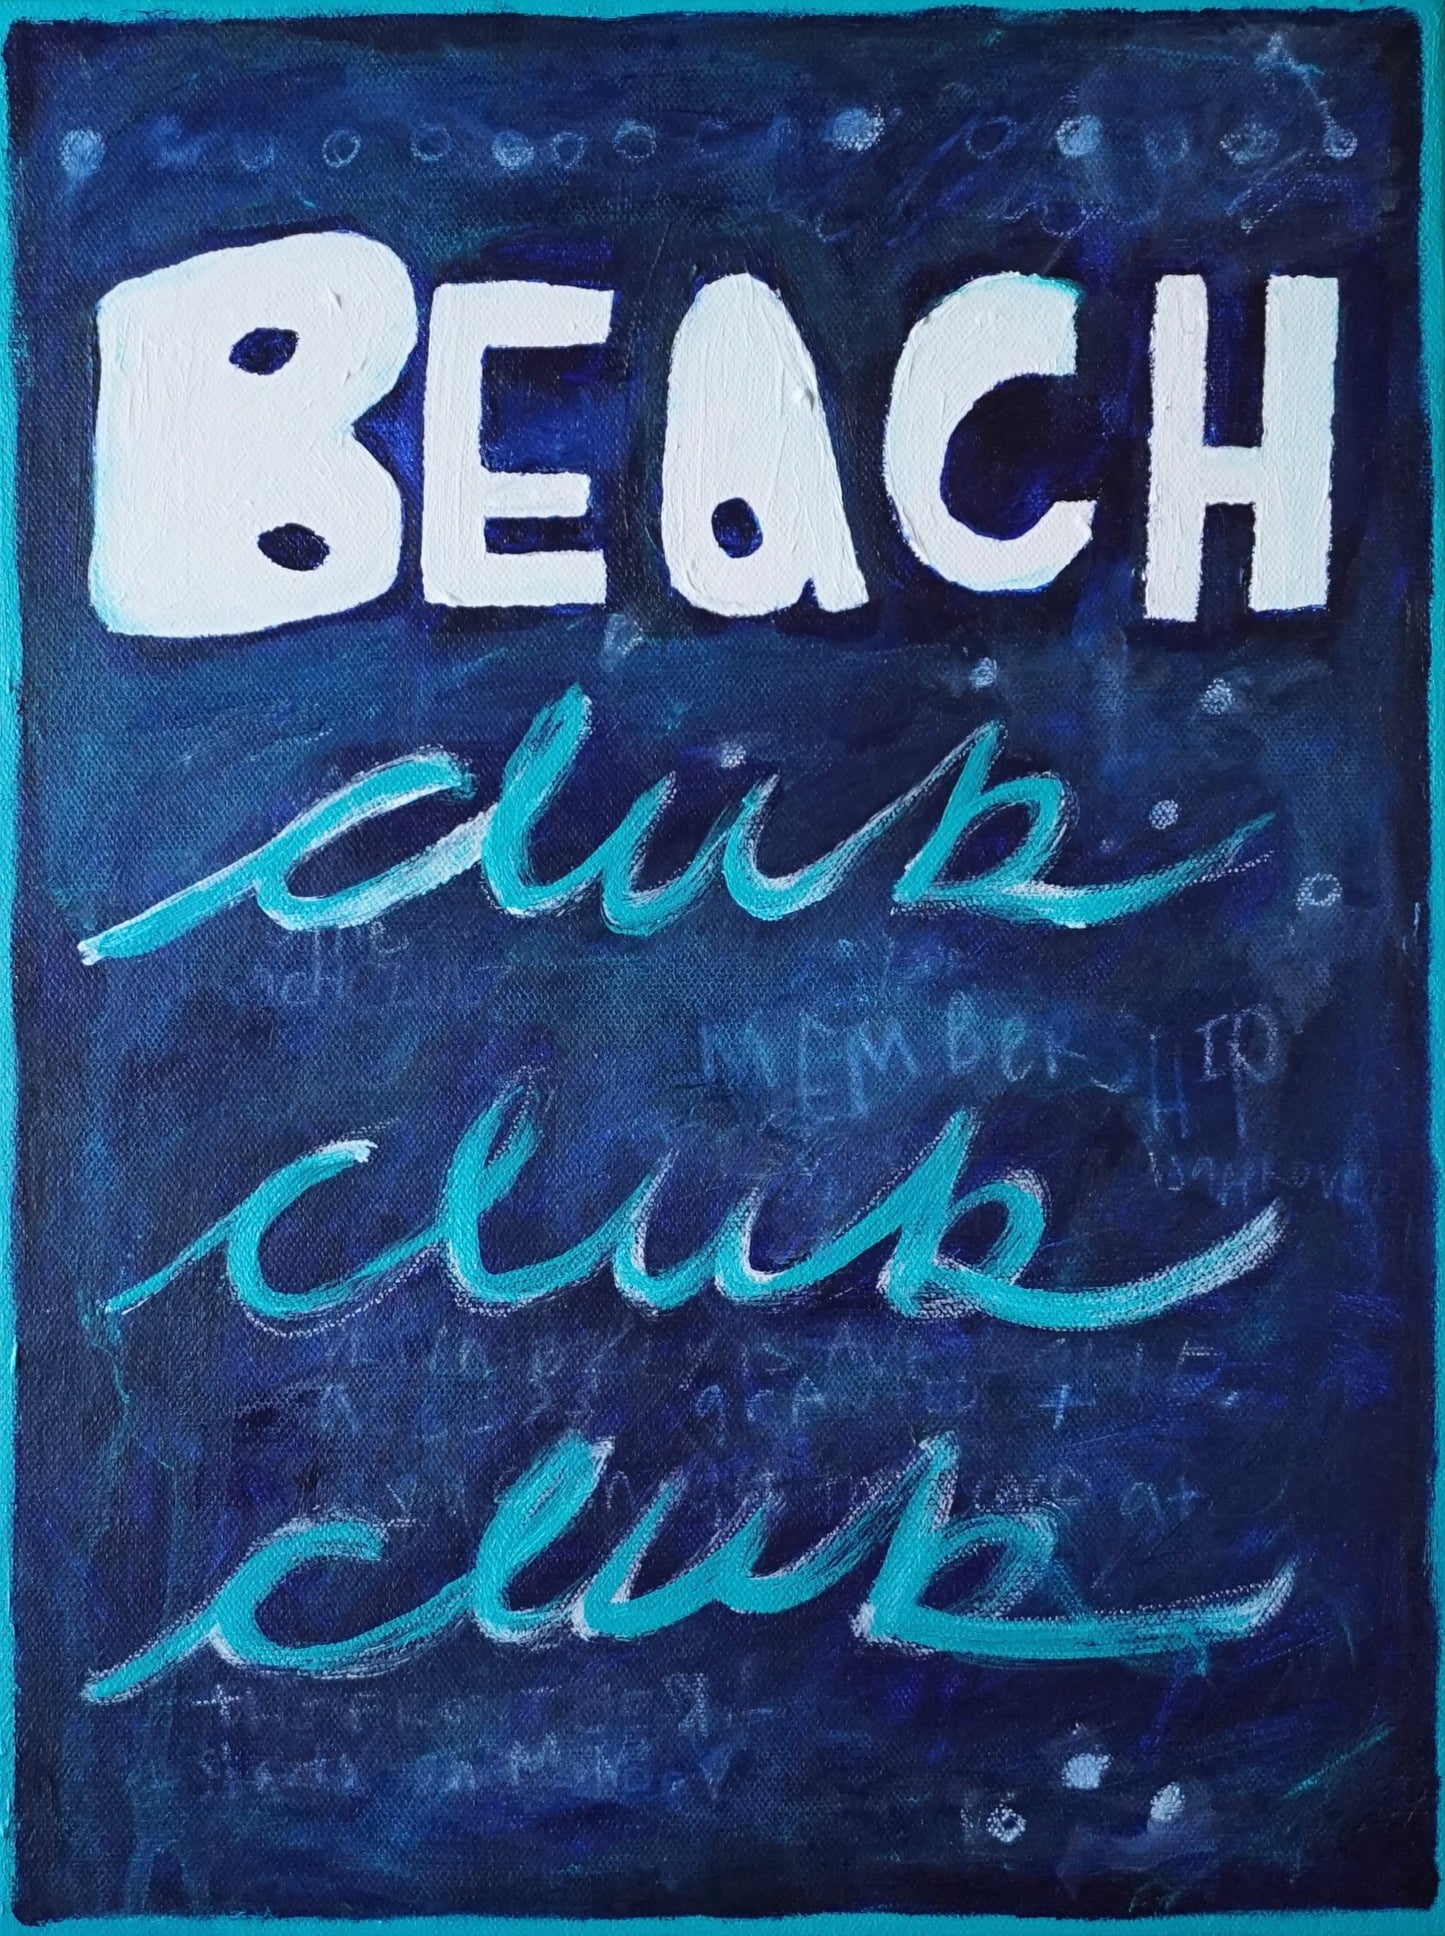 BEACH CLUB PAINTING ALEXA CUCCHIARA NICOLA BLU.JPG